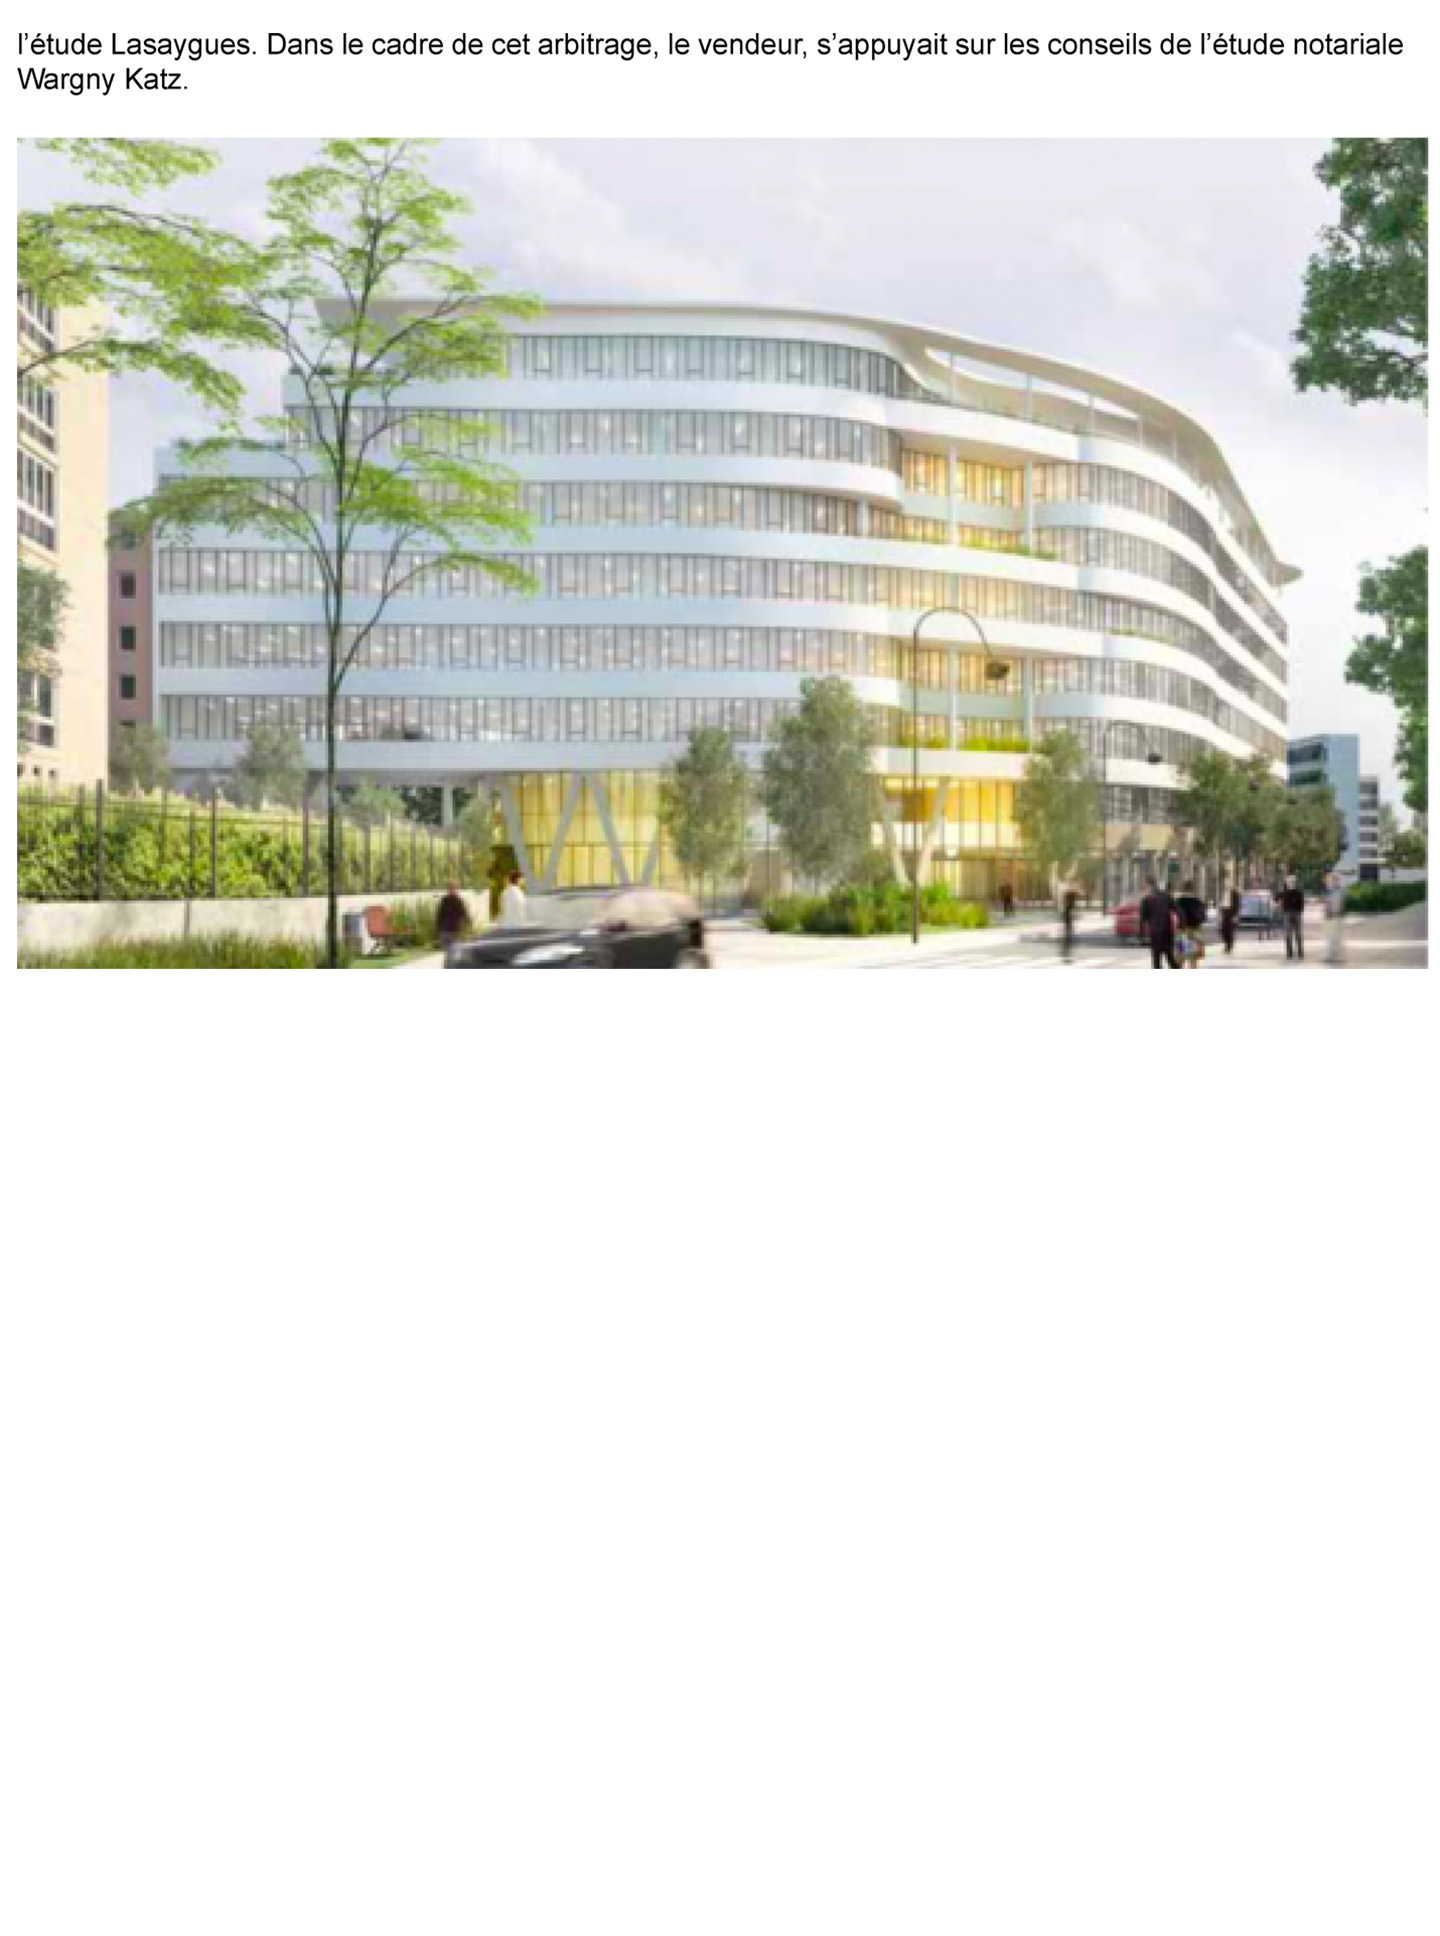 Article on the new Danone headquarters, the Danone offices designed by the interior design studio Jean-Philippe Nuel